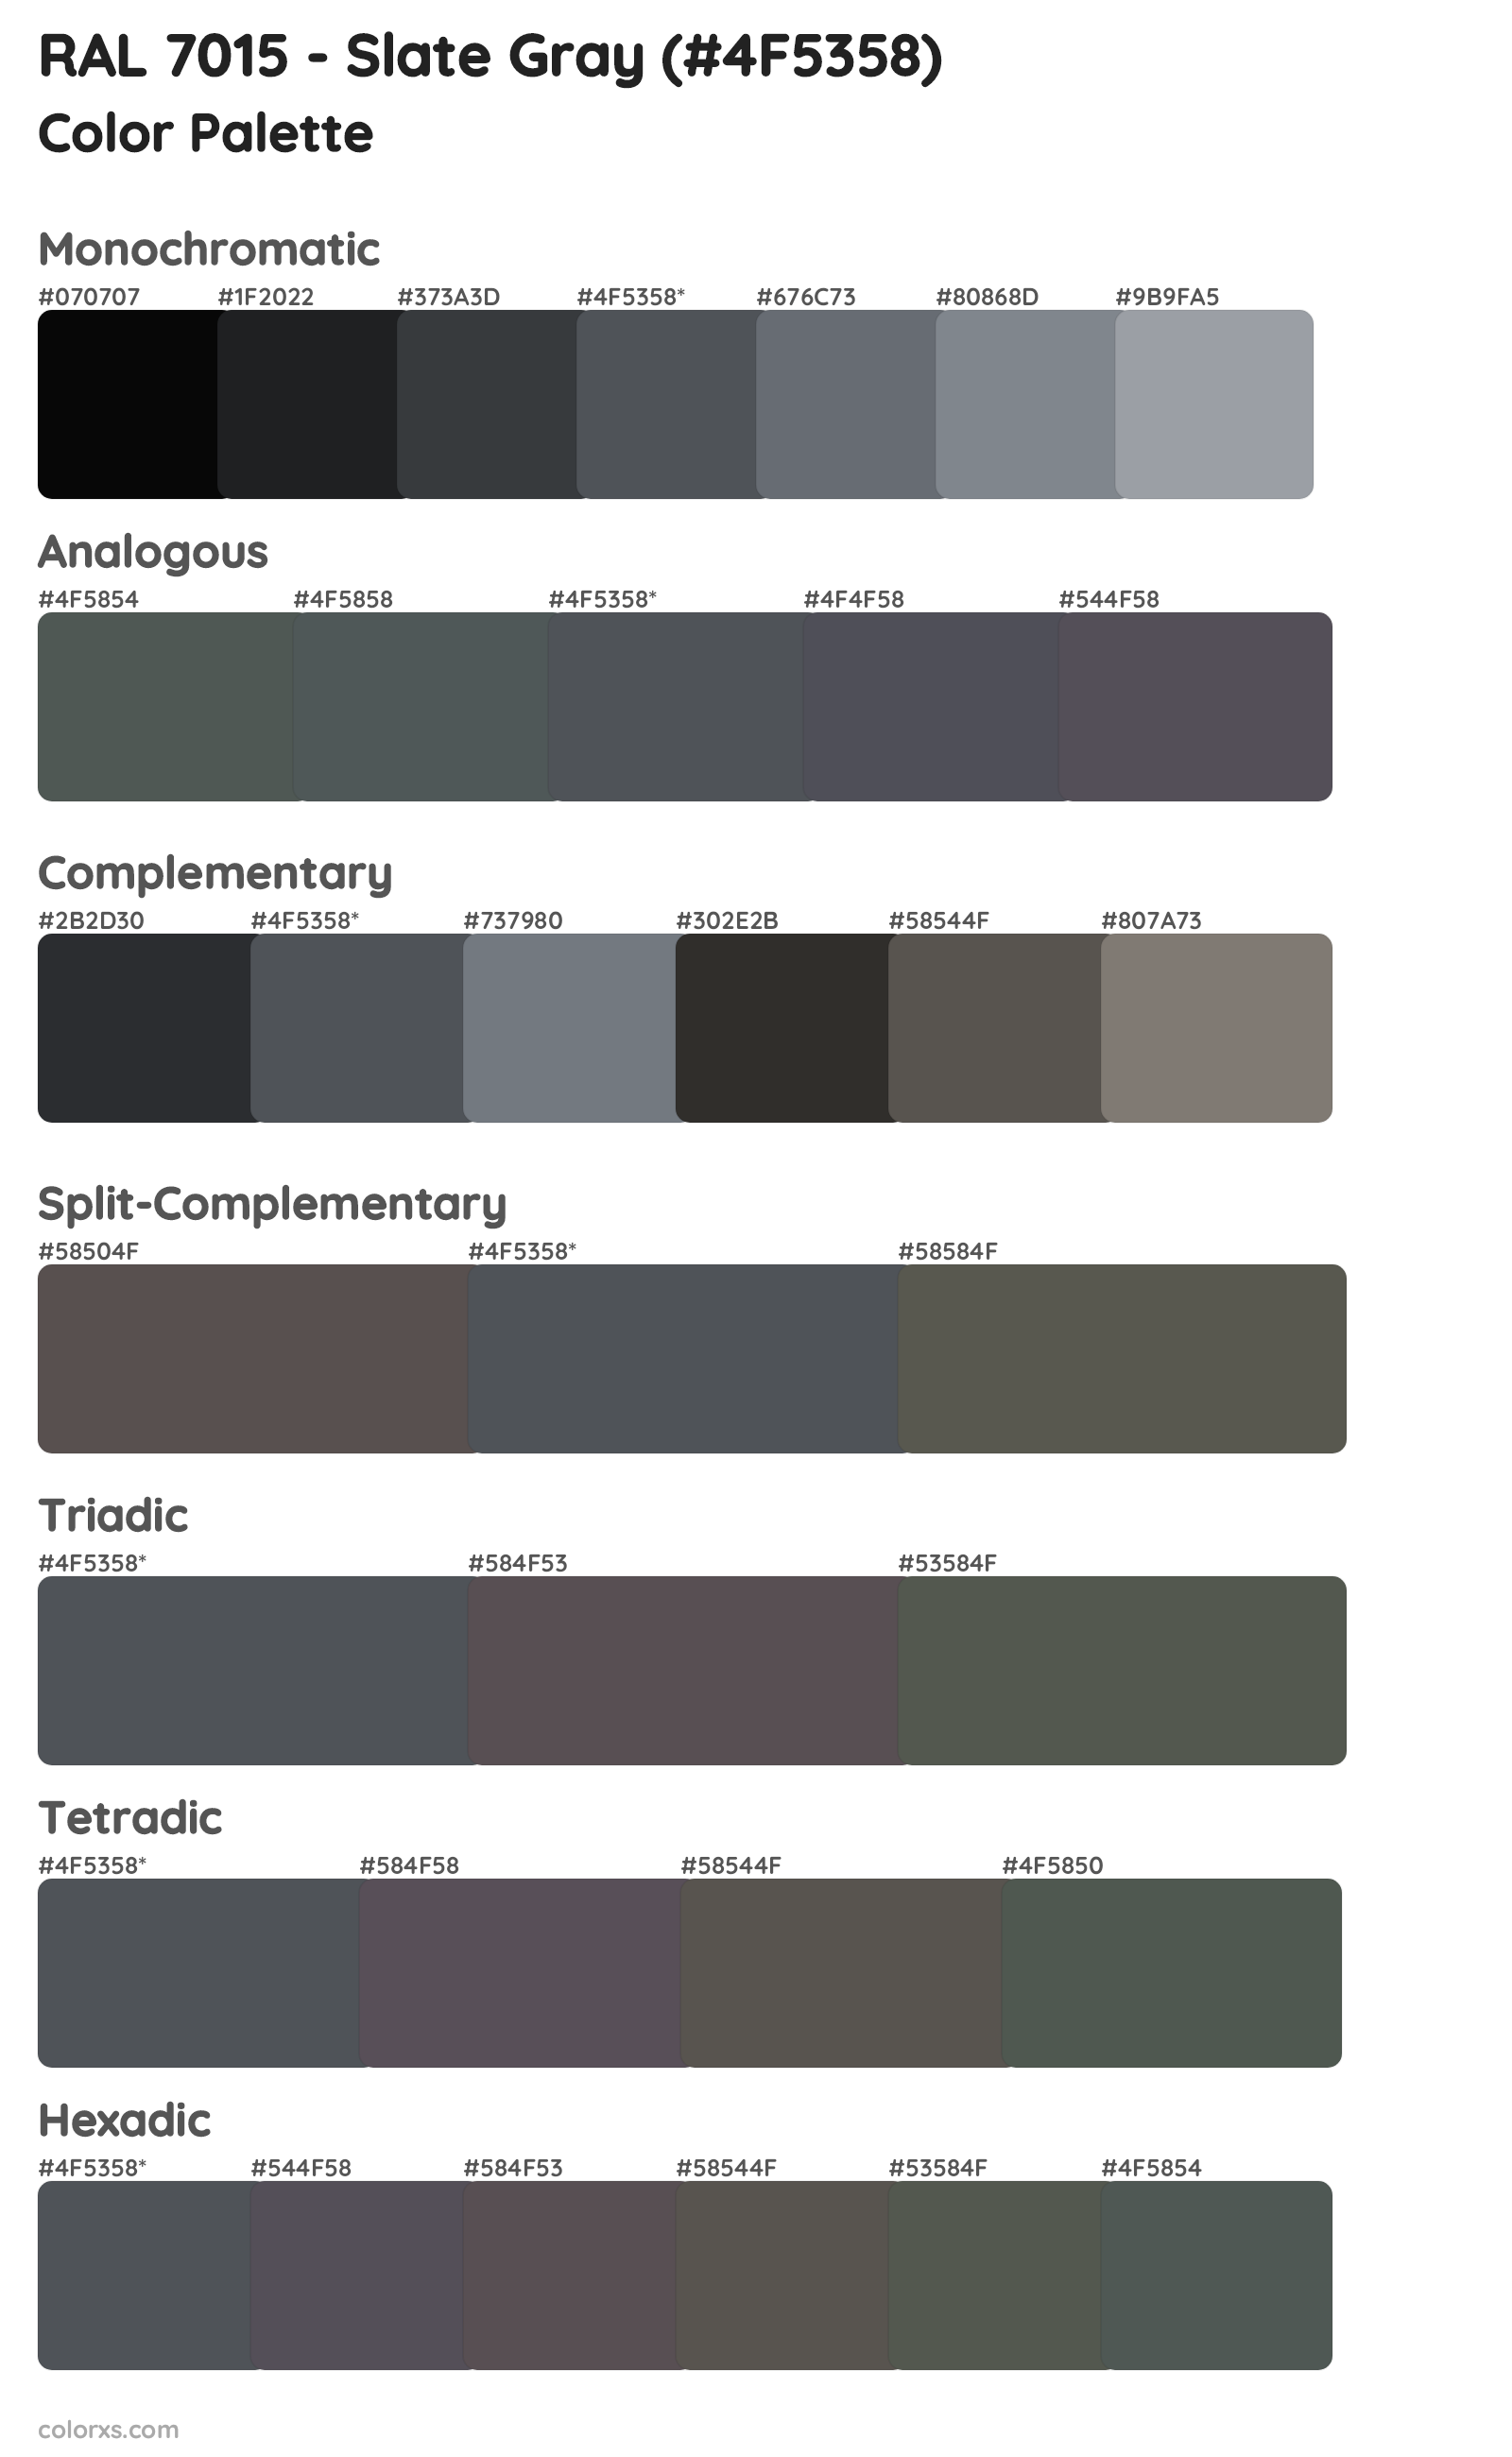 RAL 7015 - Slate Gray Color Scheme Palettes